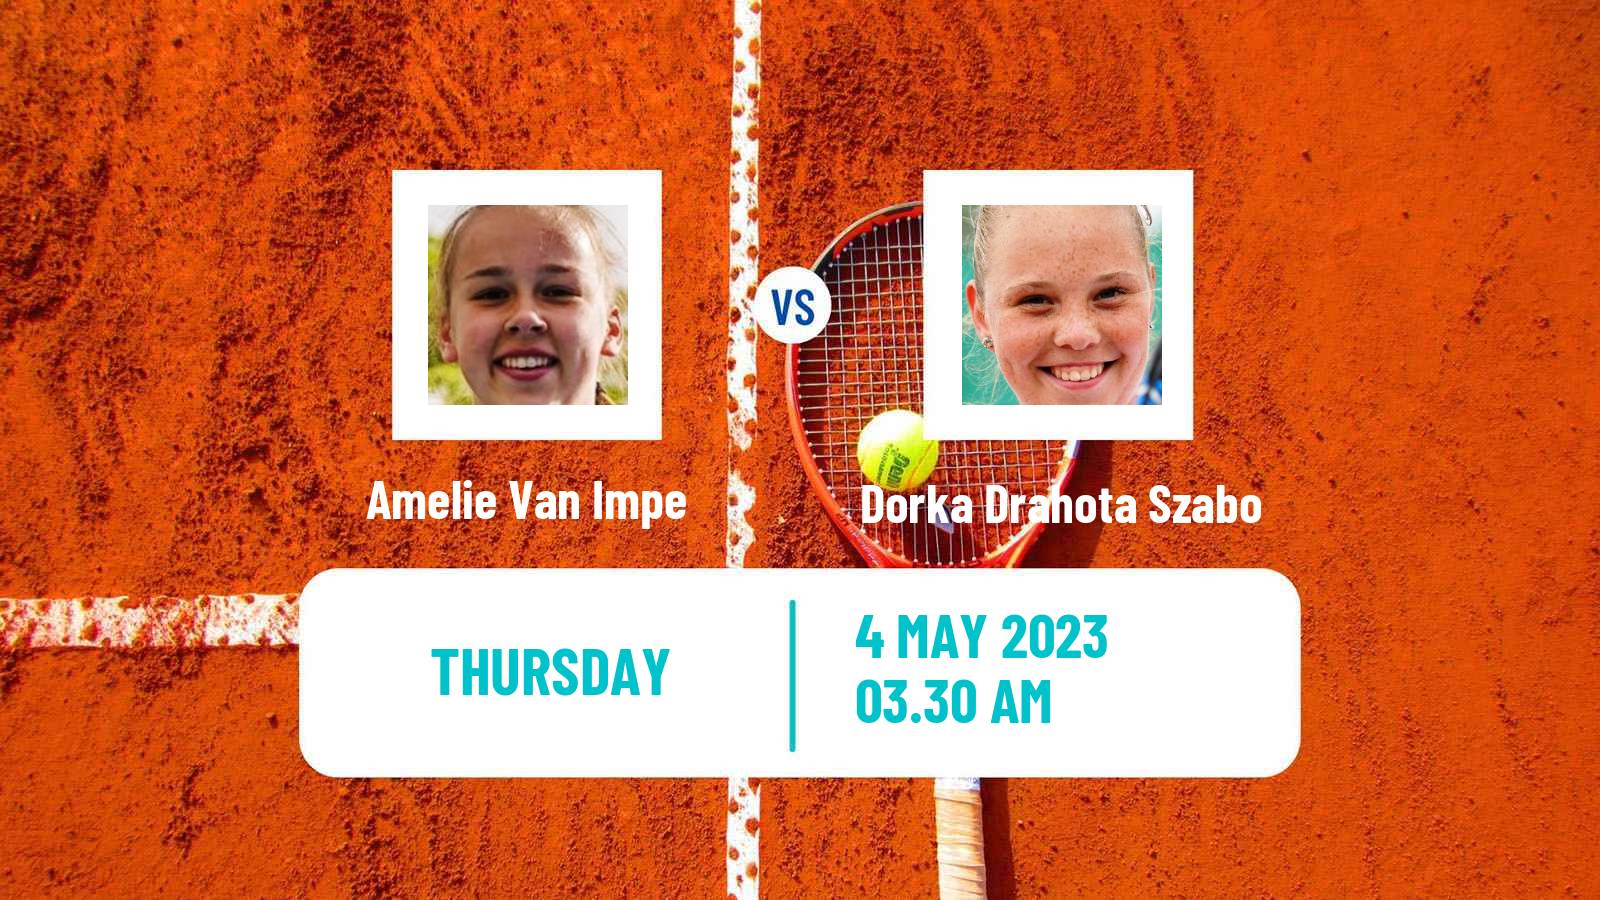 Tennis ITF Tournaments Amelie Van Impe - Dorka Drahota Szabo